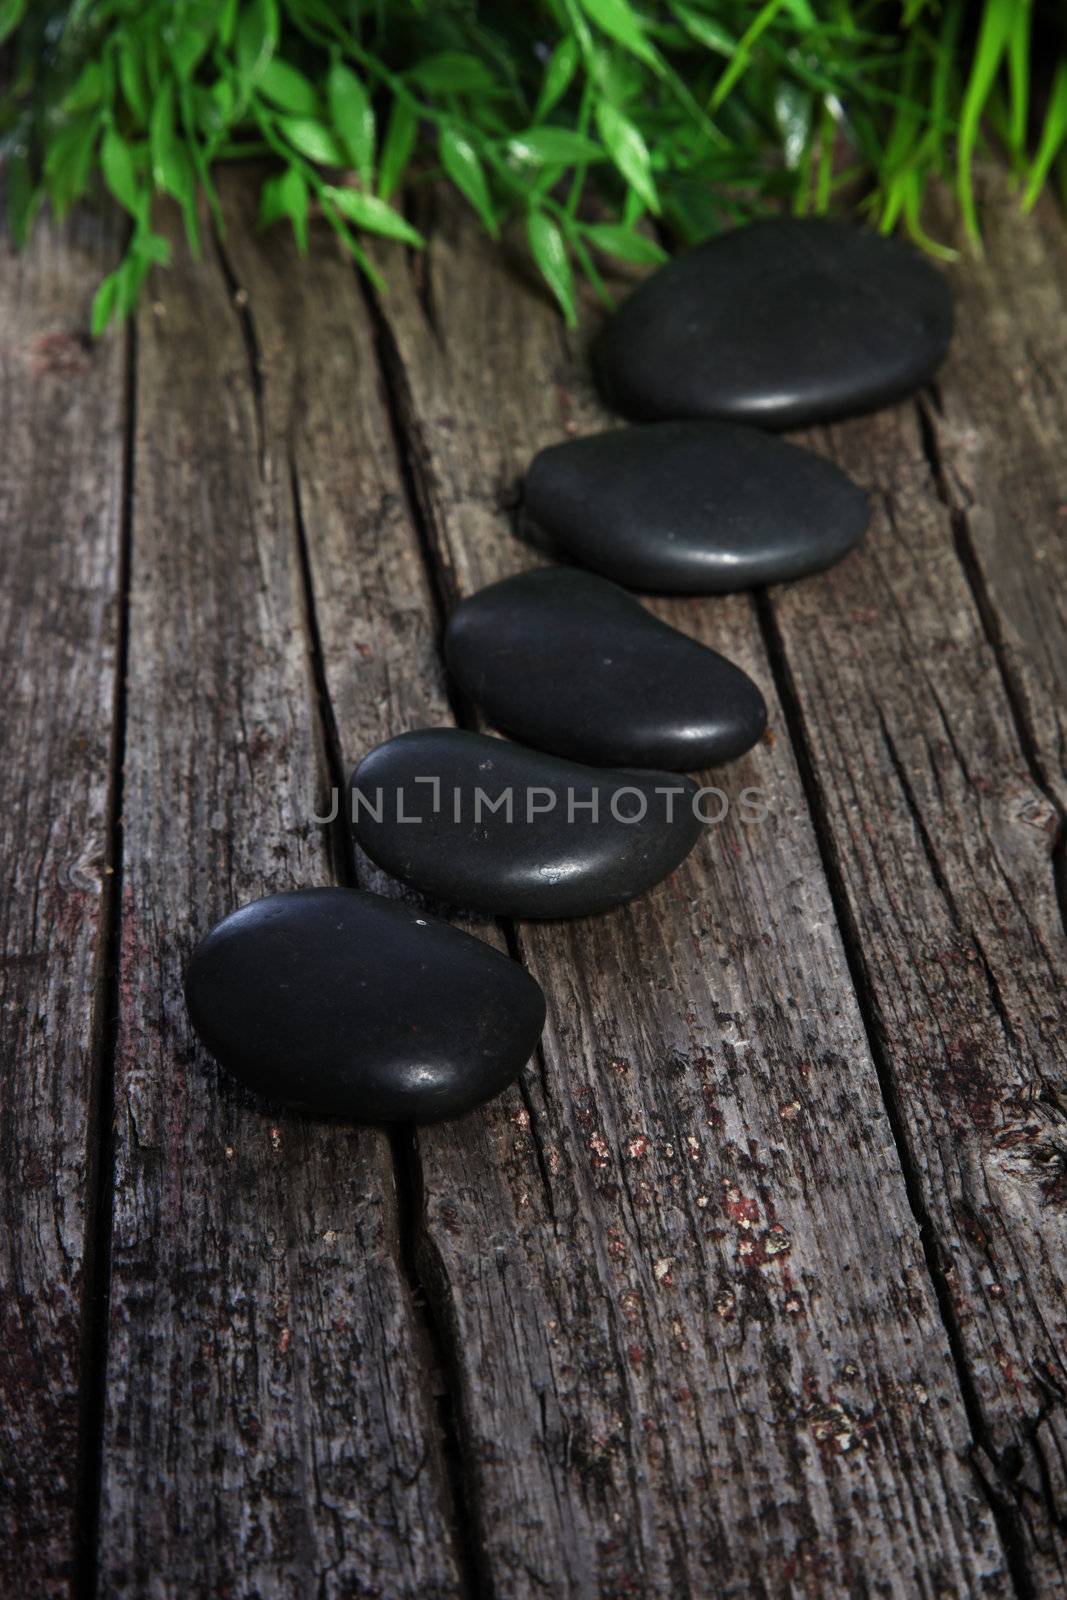 Basalt spa massage stones by Farina6000